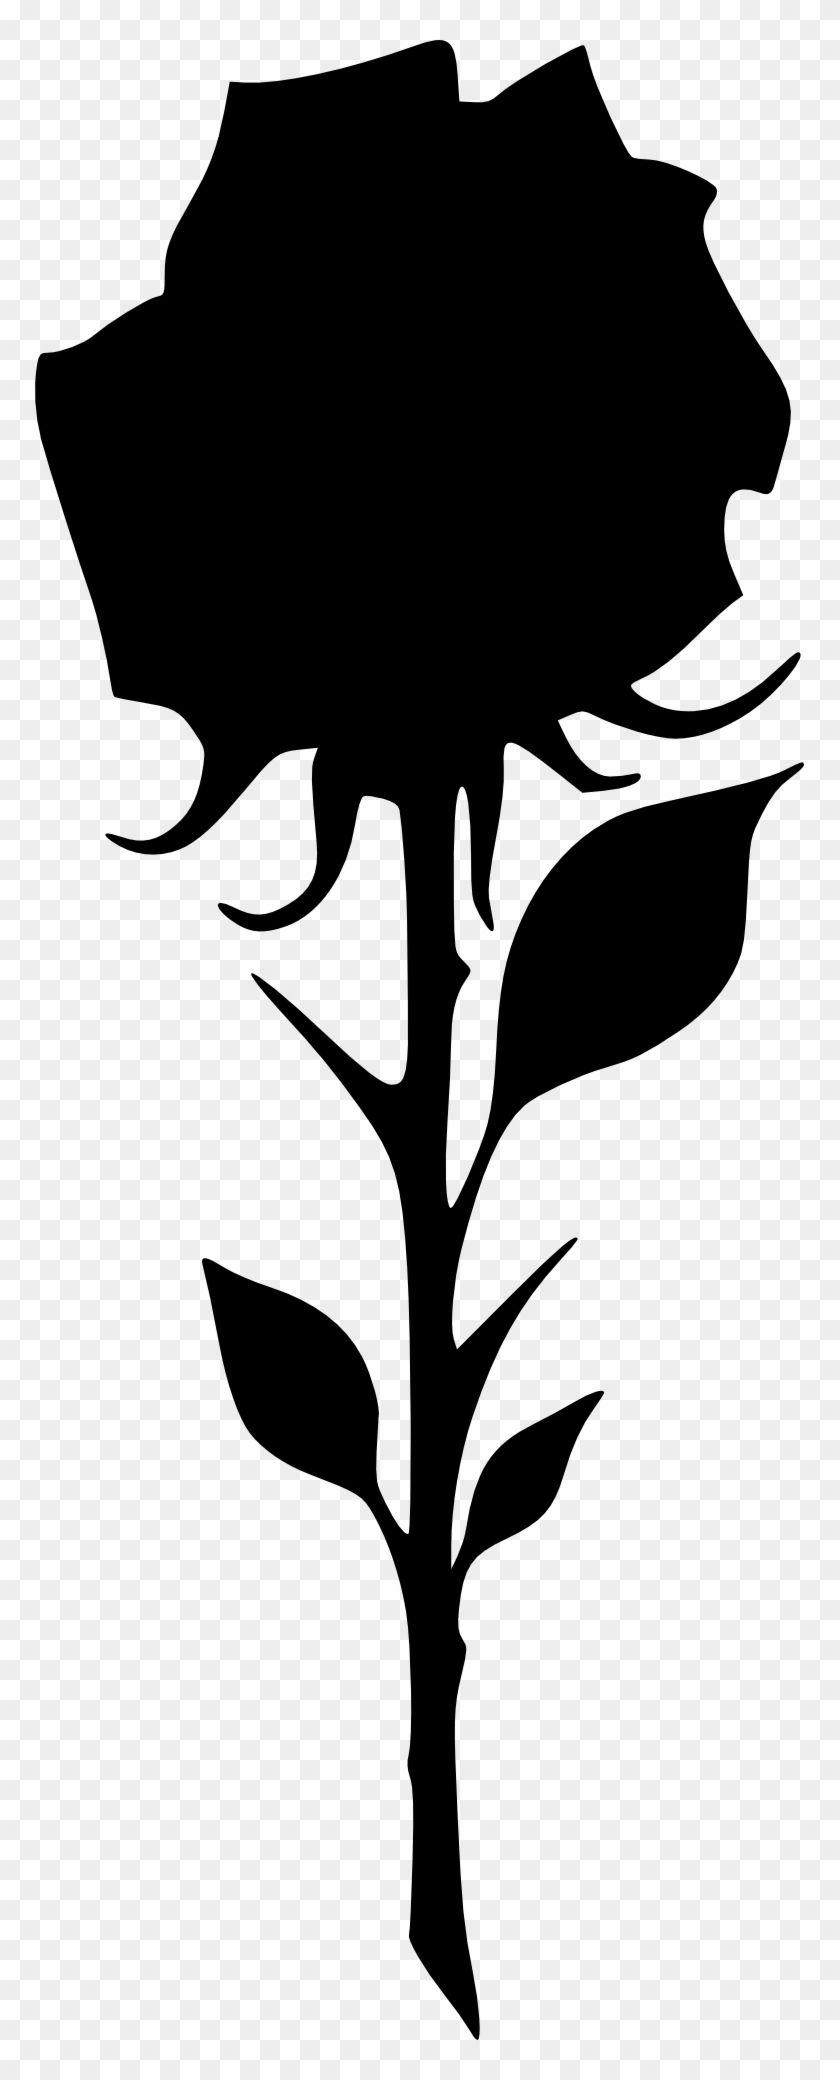 Black Rose Silhouette - Black Rose Png Clipart #243864